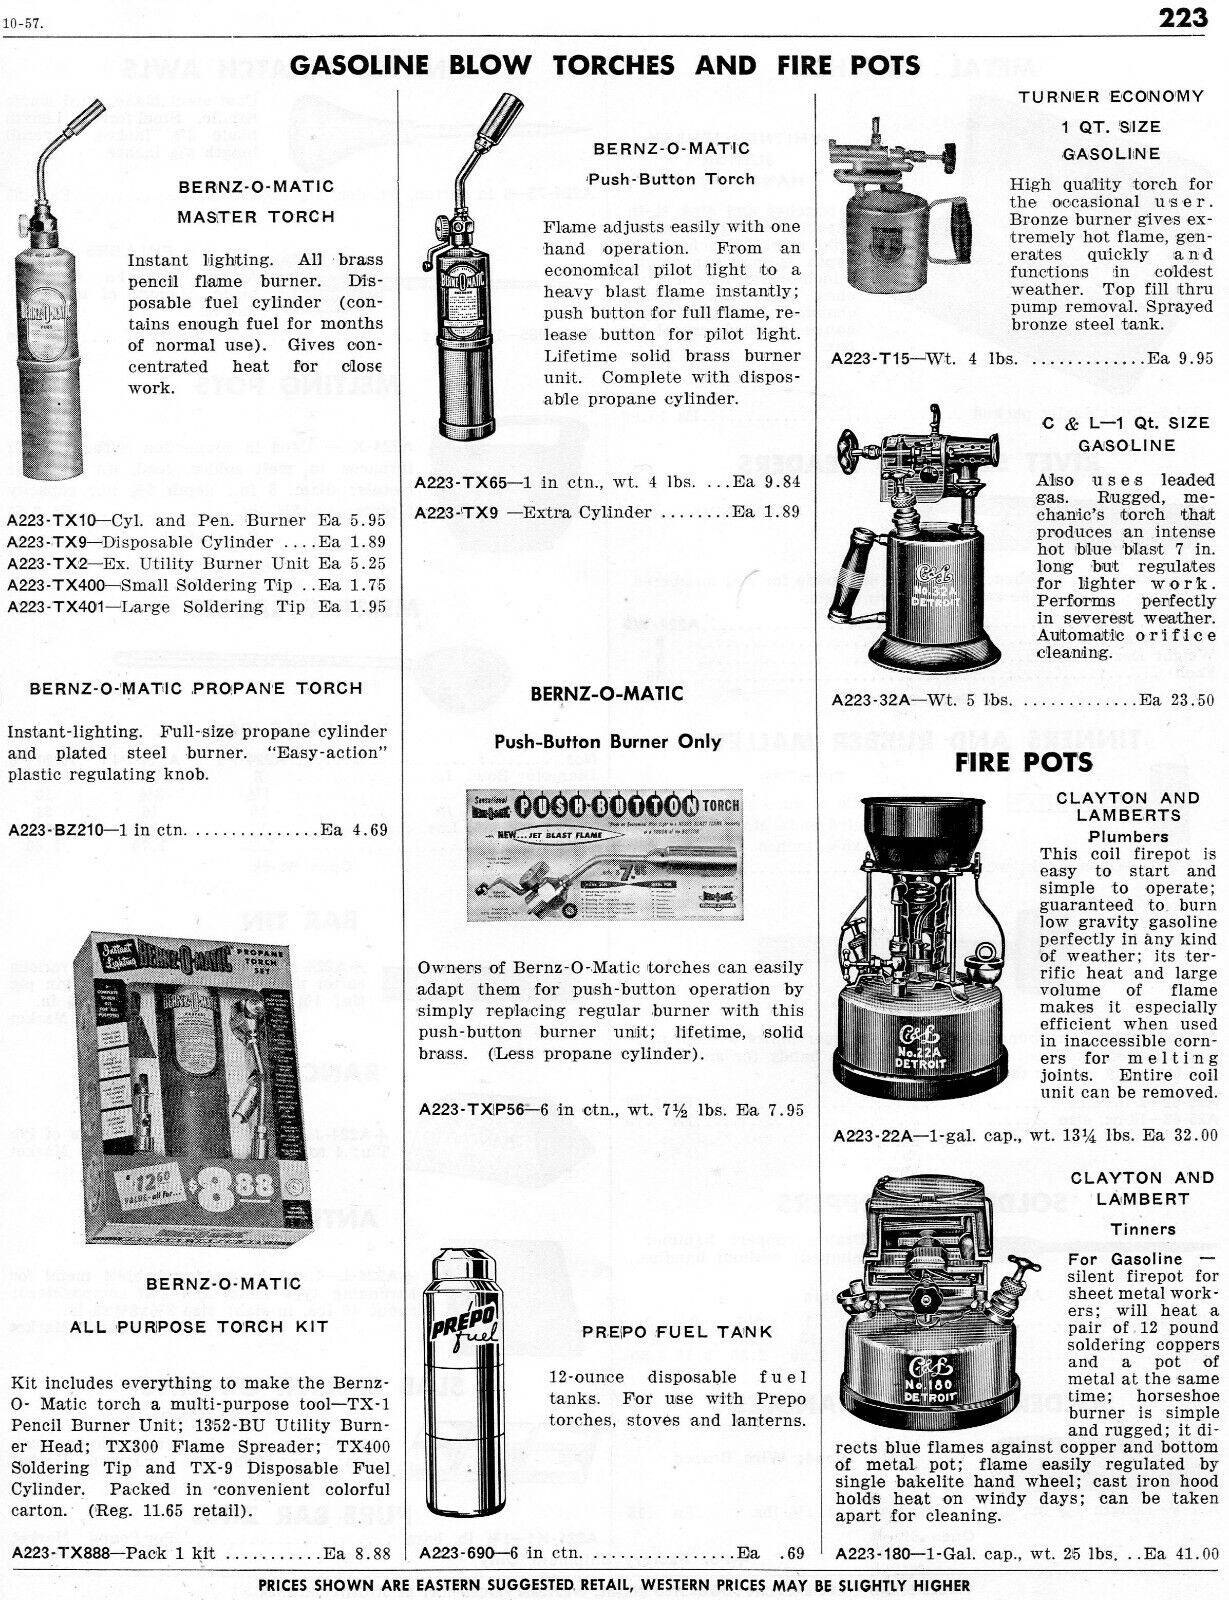 1958 Print Ad of Bernz-O-Matic Turner C&L Clayton Gas Blow Torches & Fire Pots